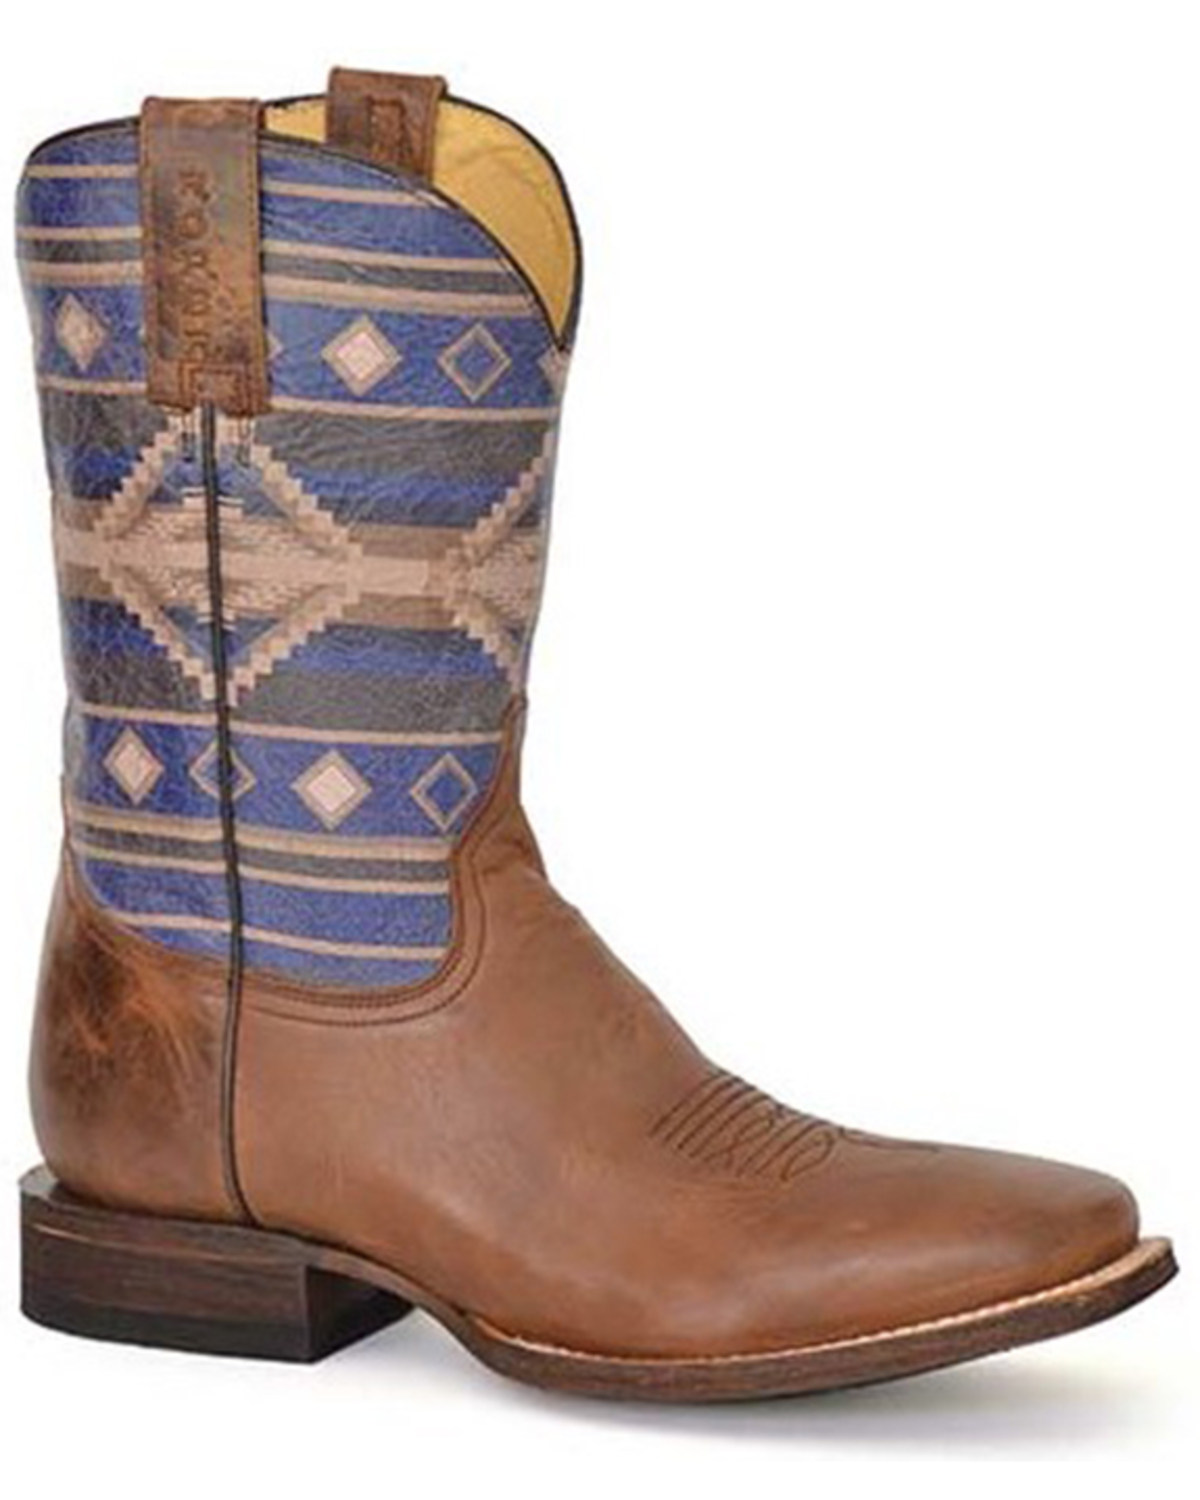 Roper Men's Southwestern Boots - Broad Square Toe